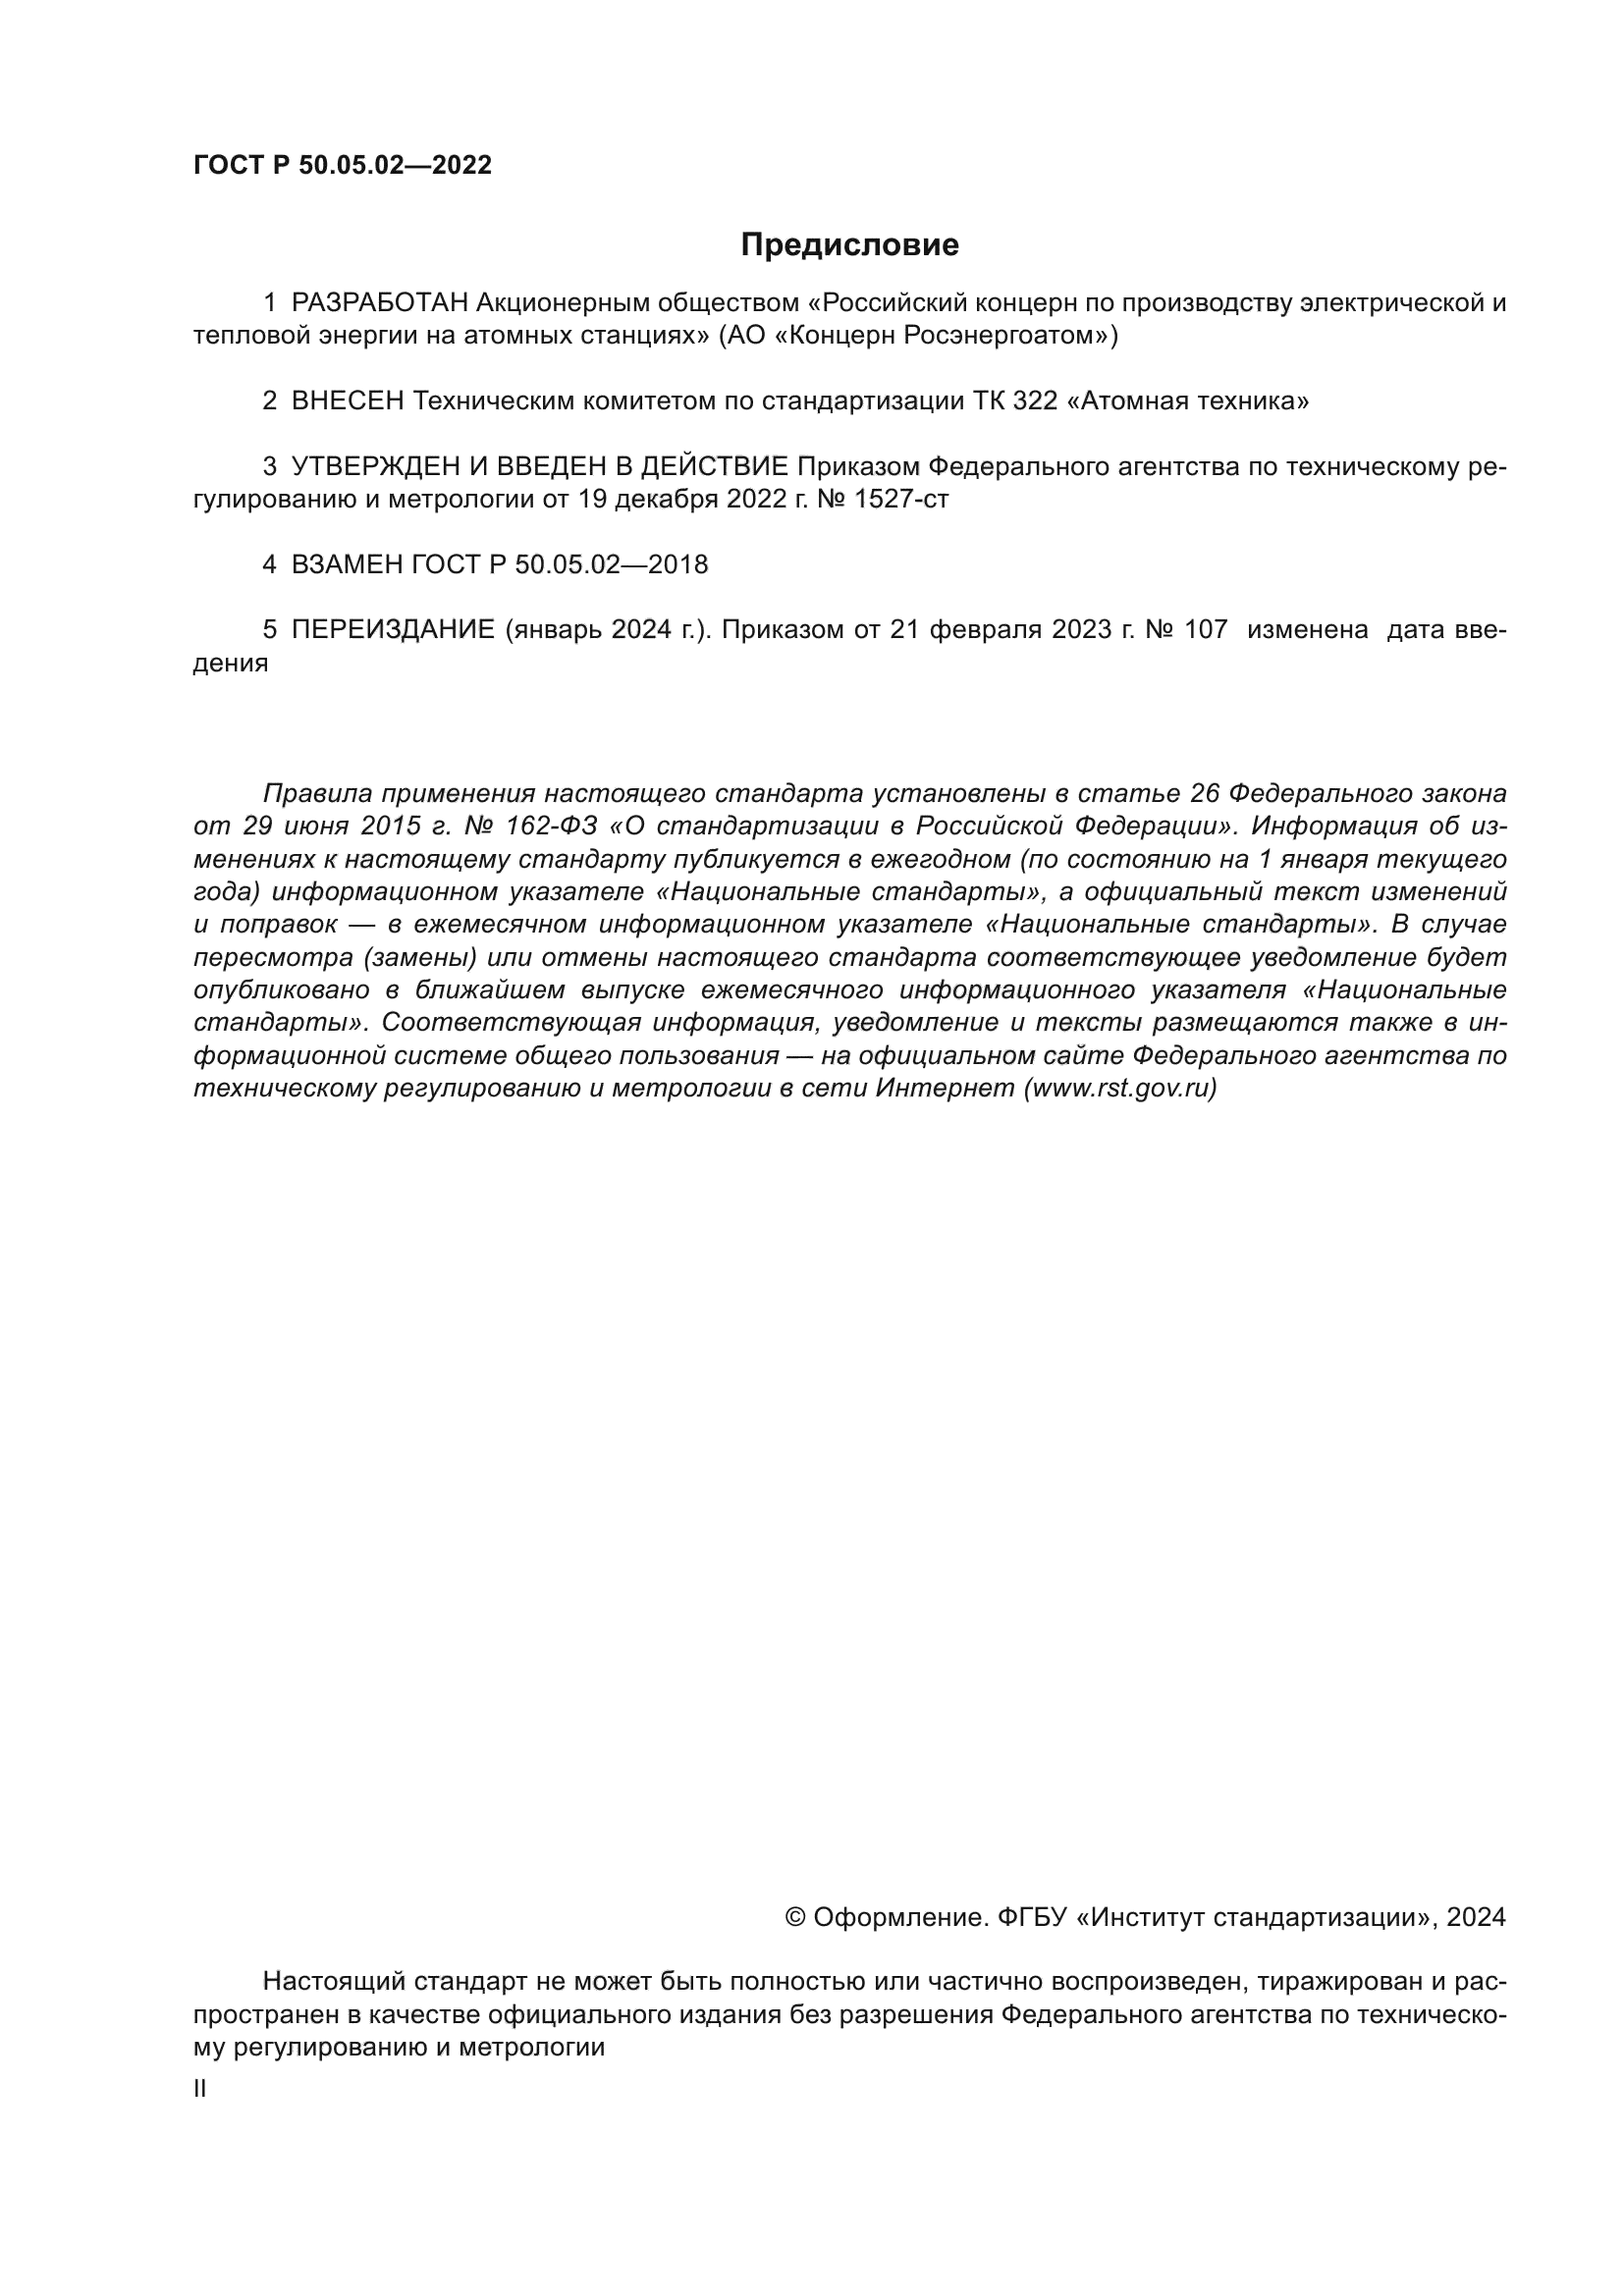 ГОСТ Р 50.05.02-2022